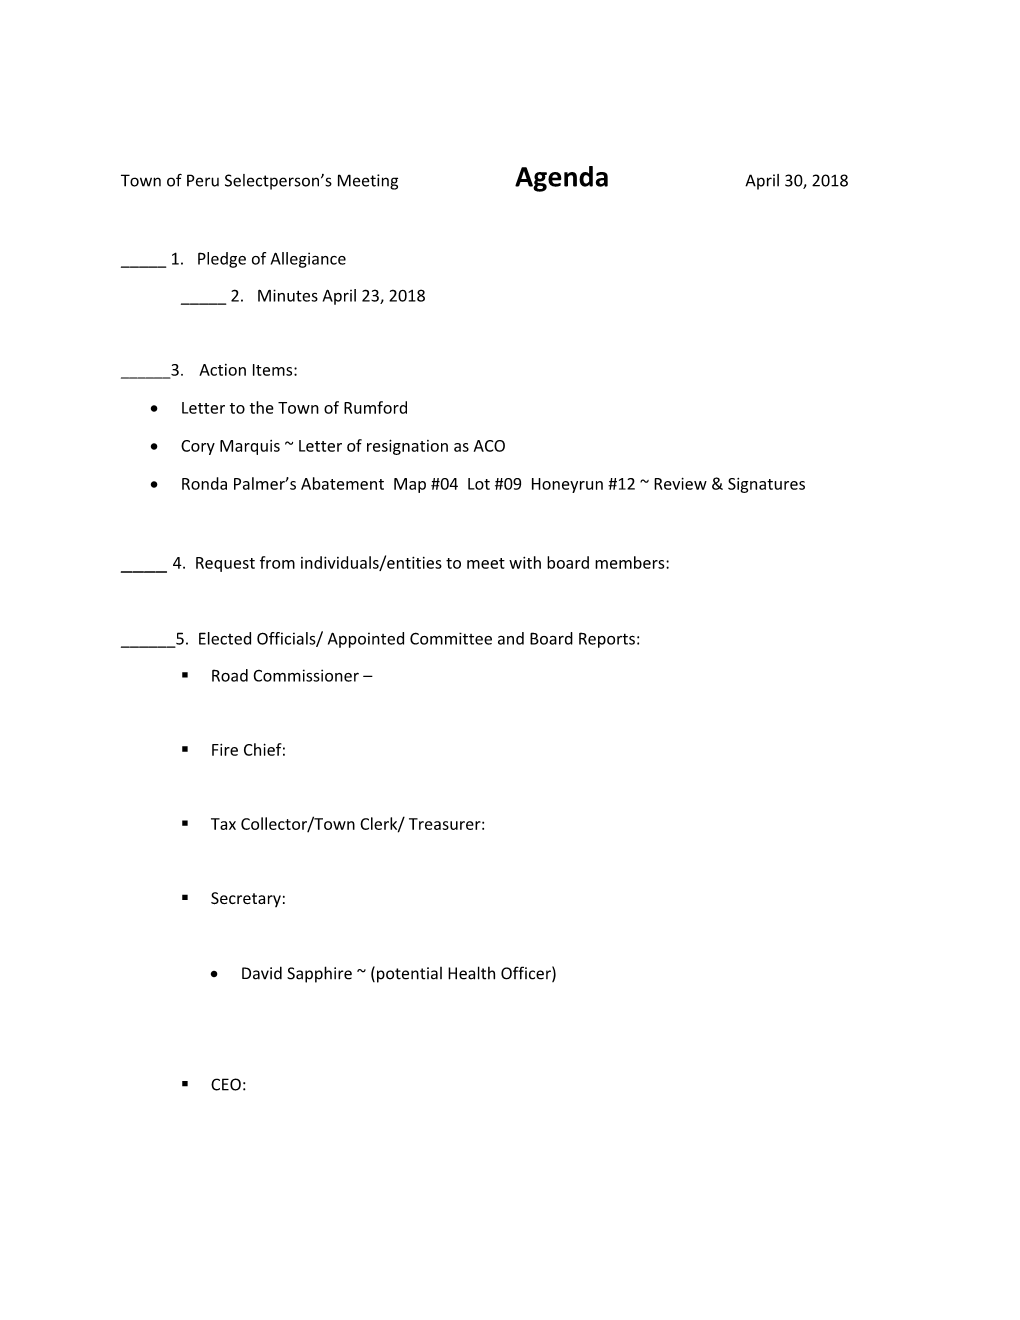 Town of Peru Selectperson S Meeting Agenda April 30, 2018